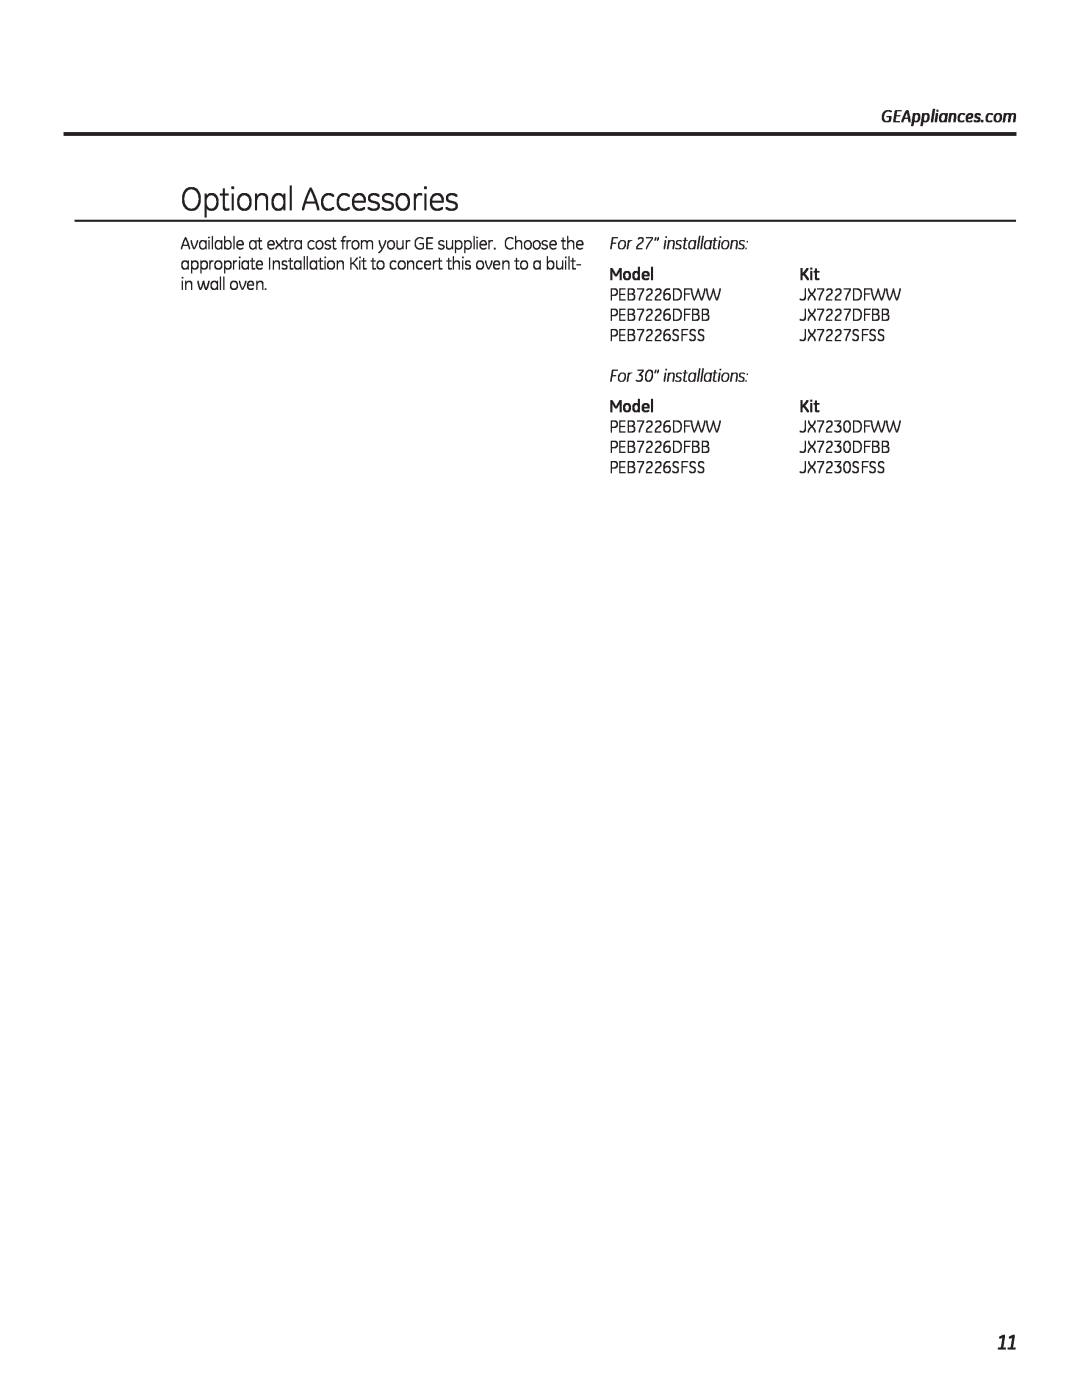 GE PEB7226 owner manual Optional Accessories, Model 